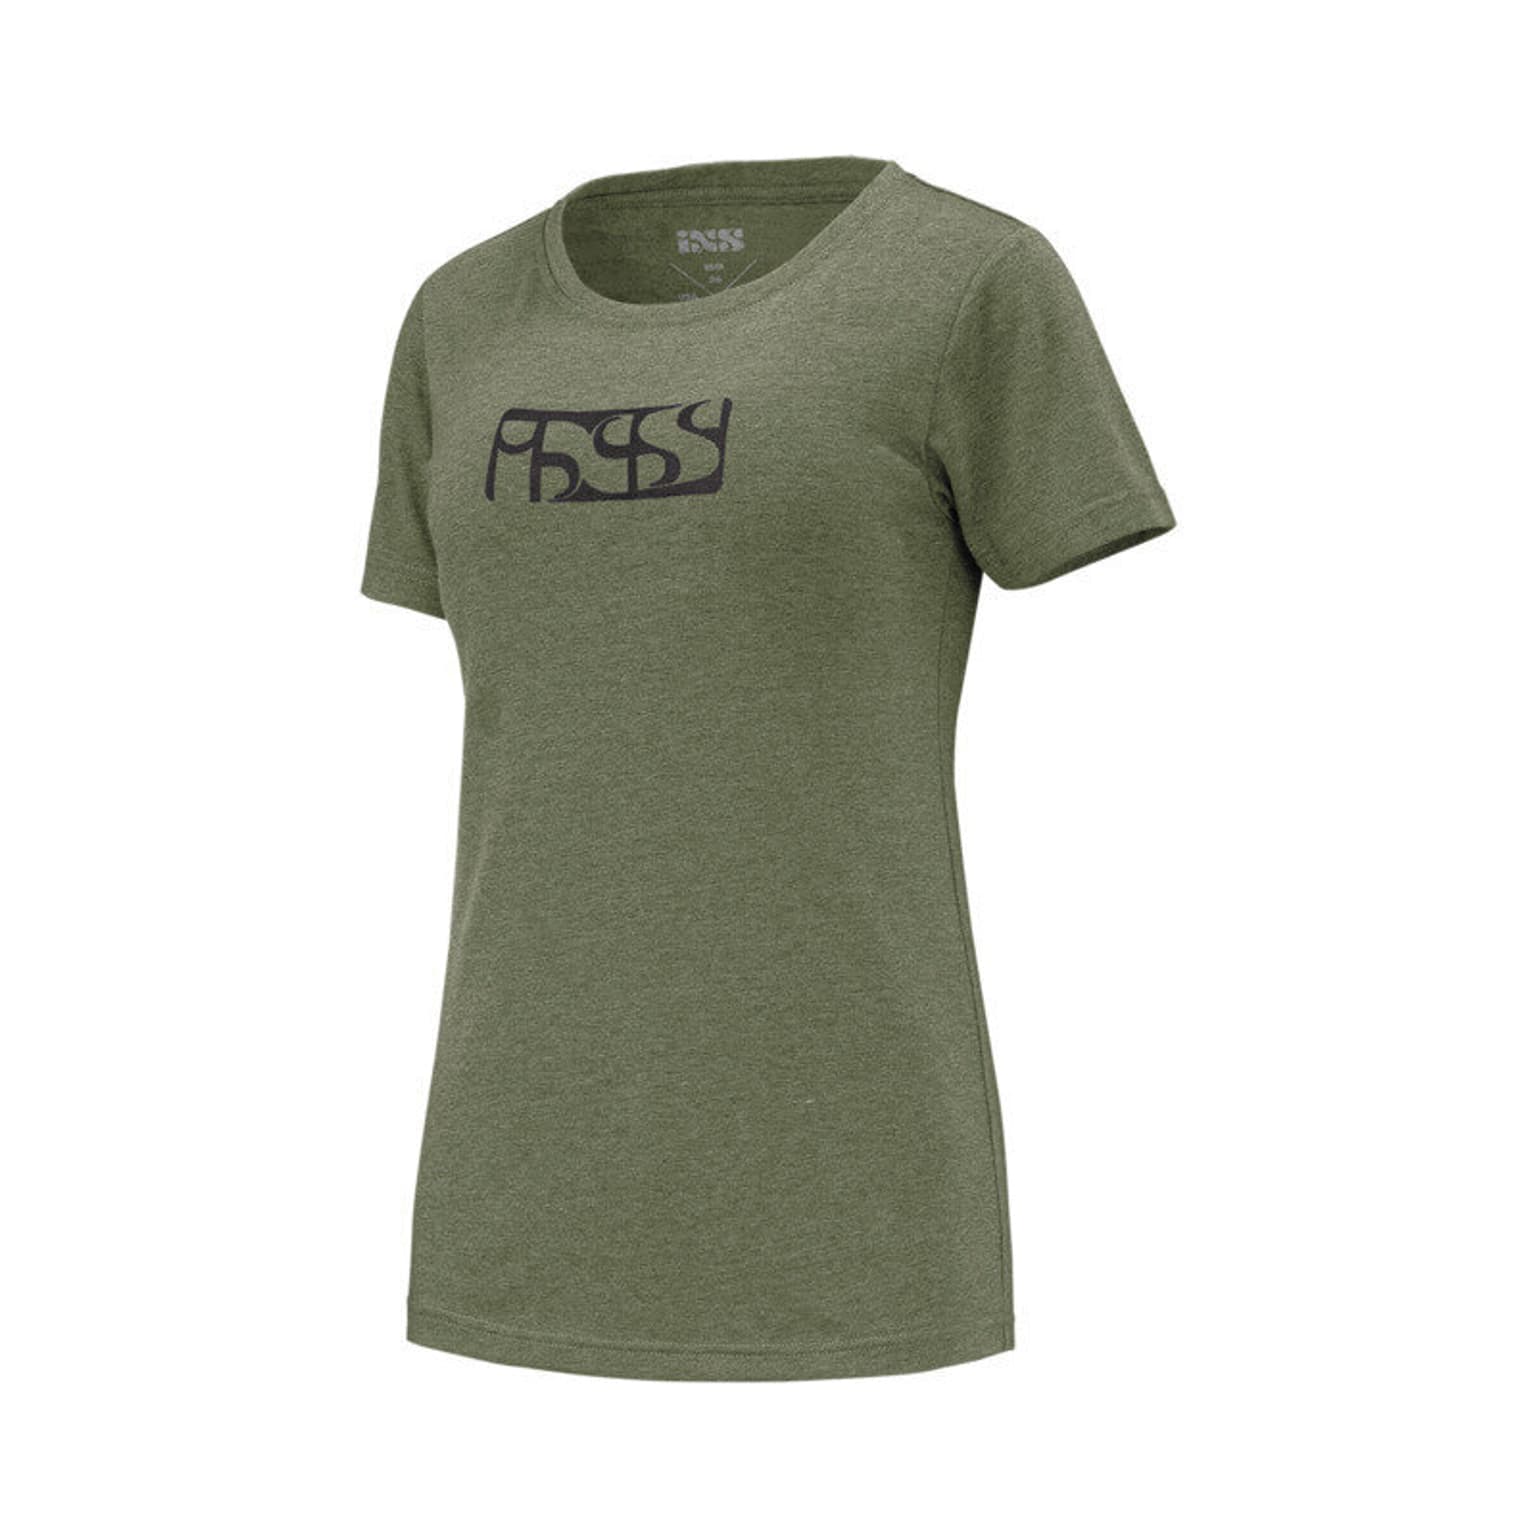 iXS iXS Brand Tee T-Shirt khaki 1